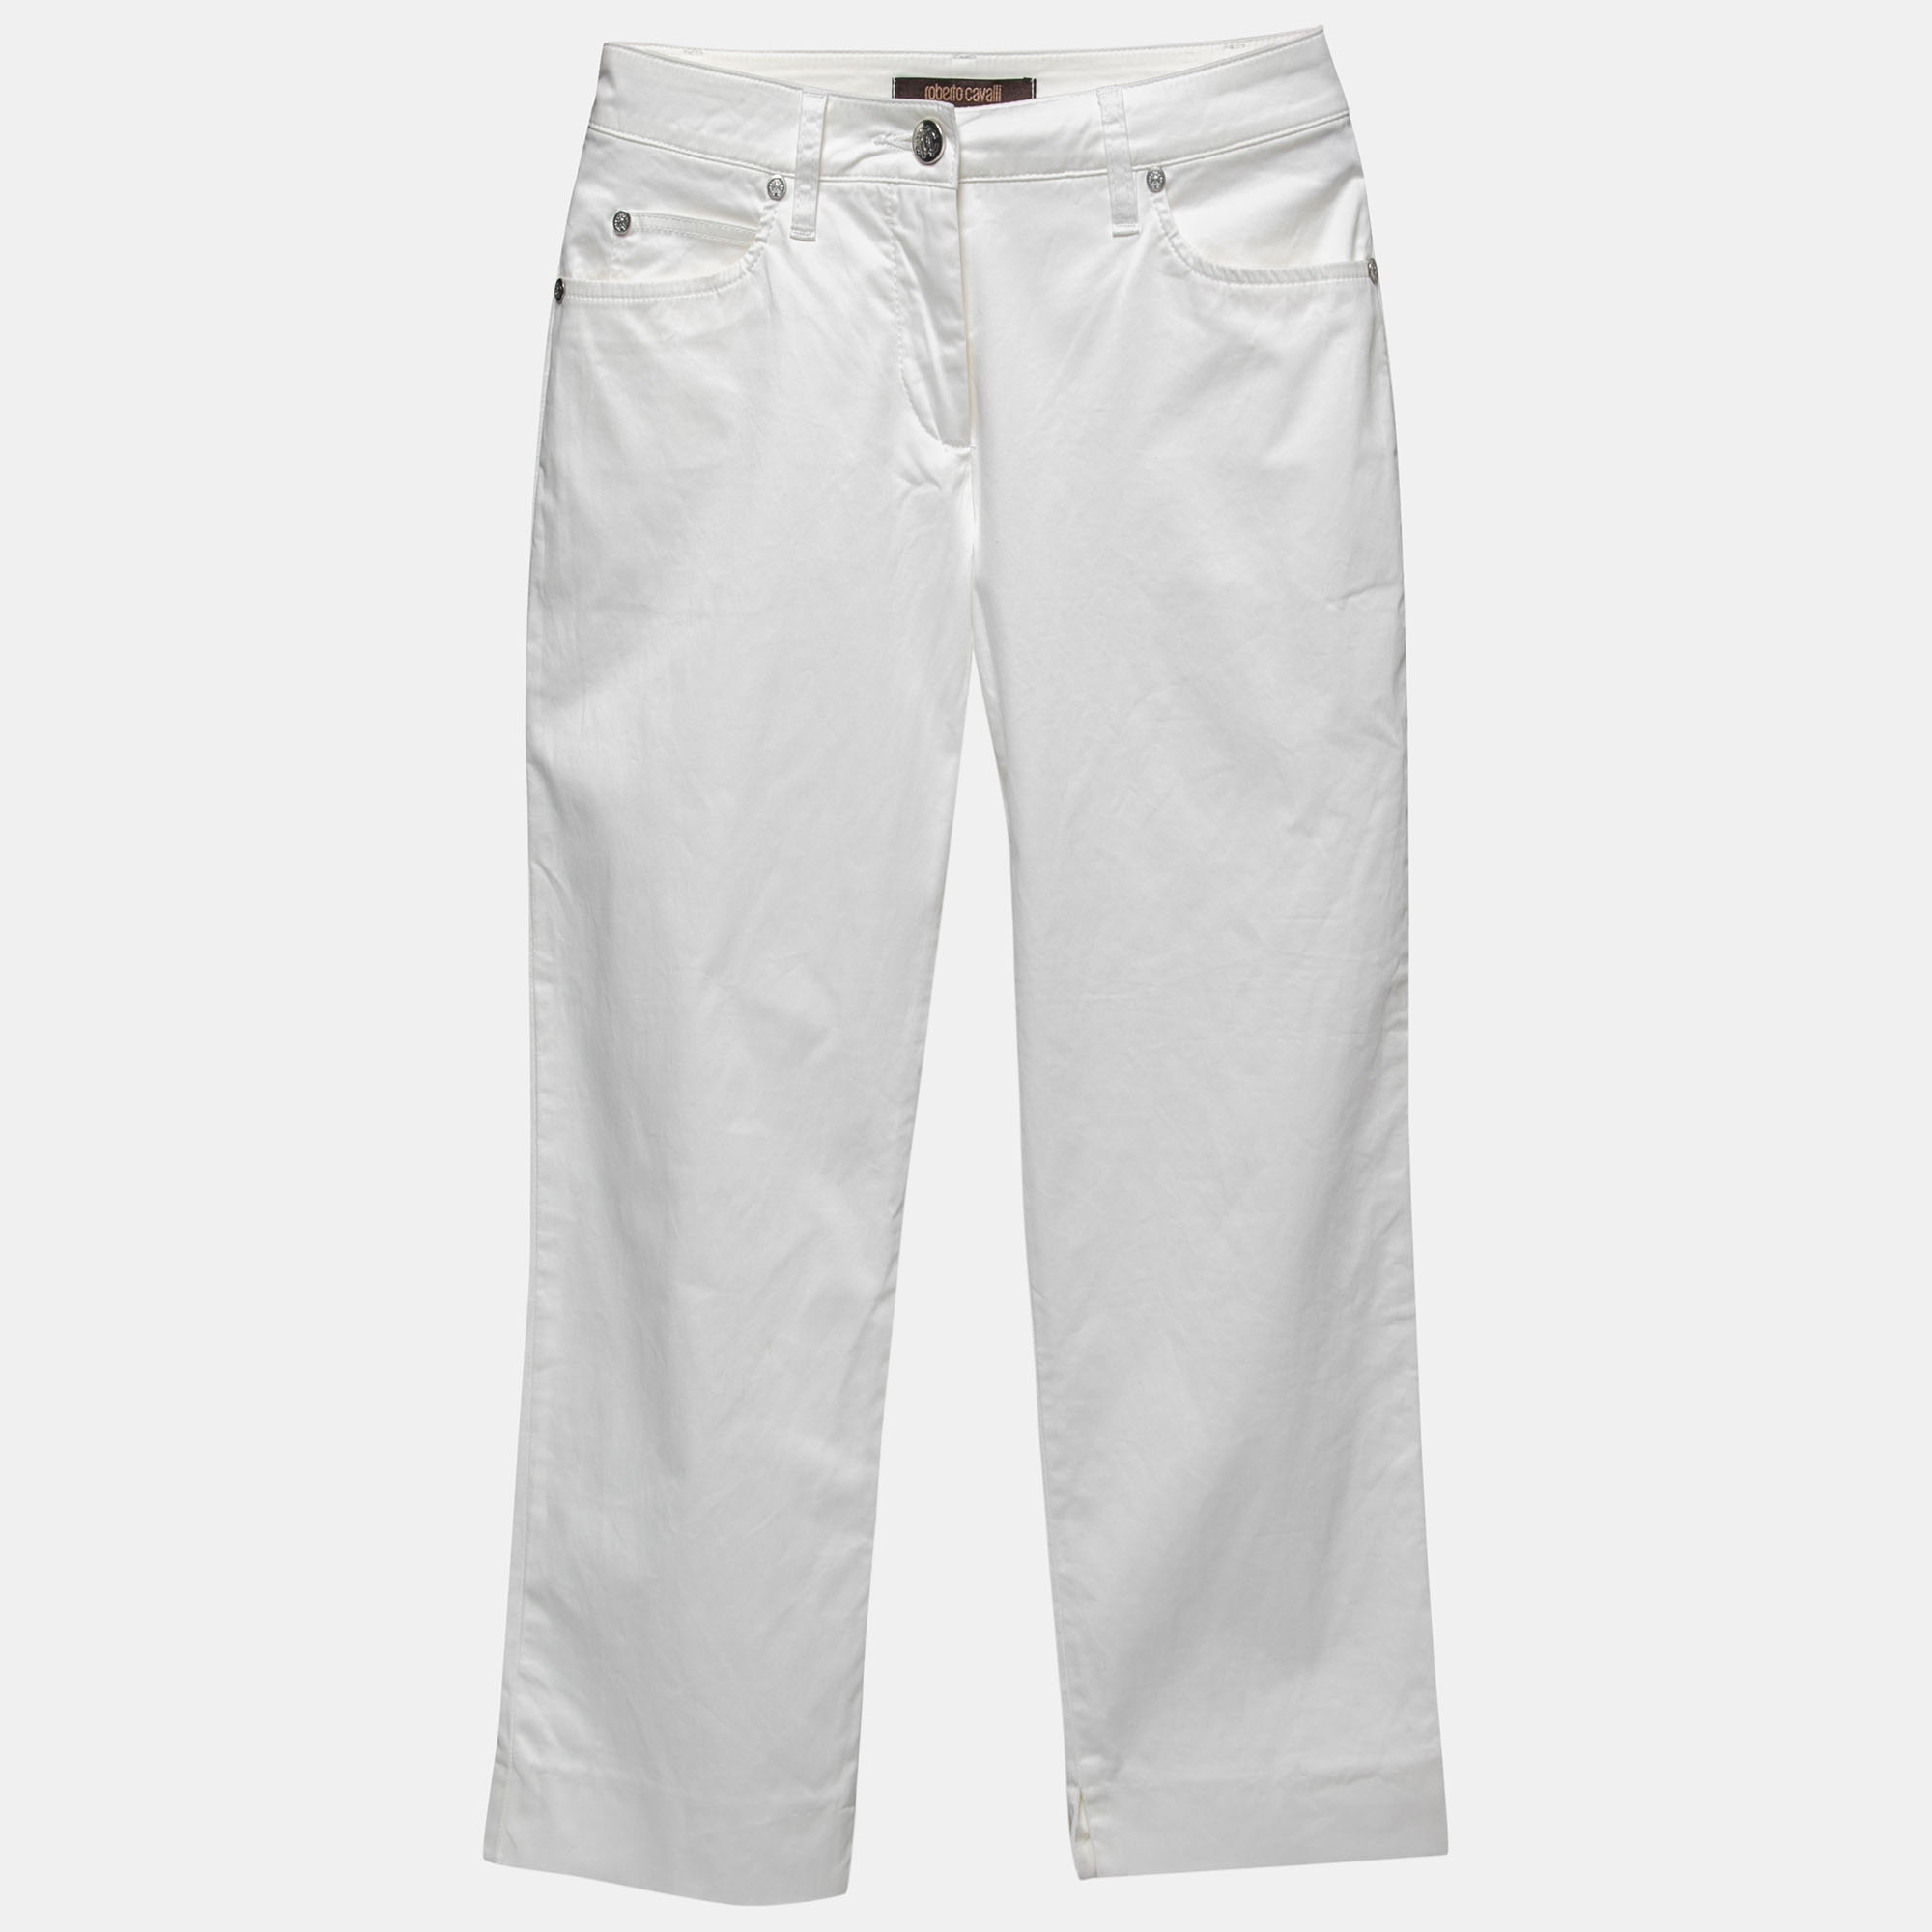 Roberto Cavalli White Cotton Capri Pants S